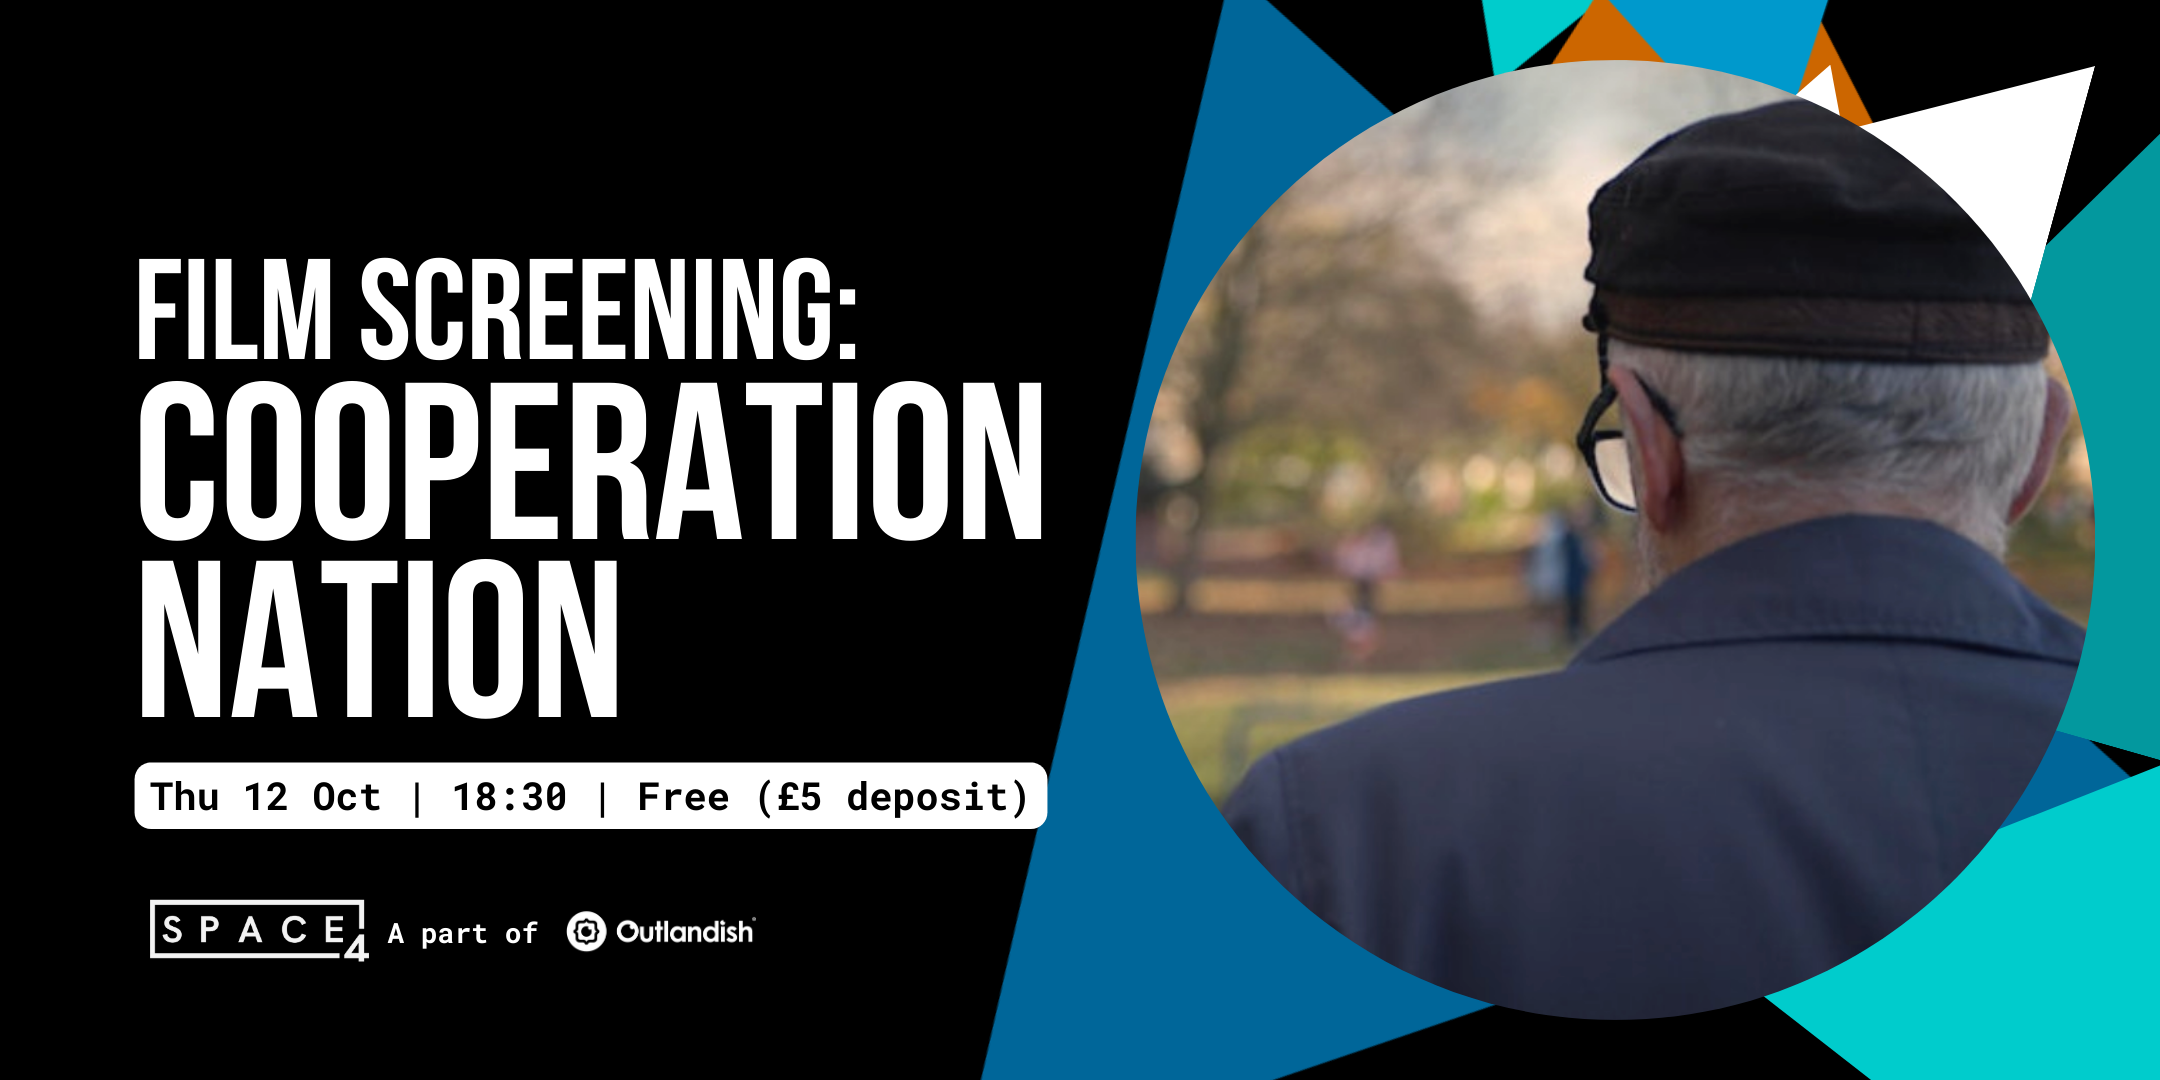 Film Screening: Cooperation Nation